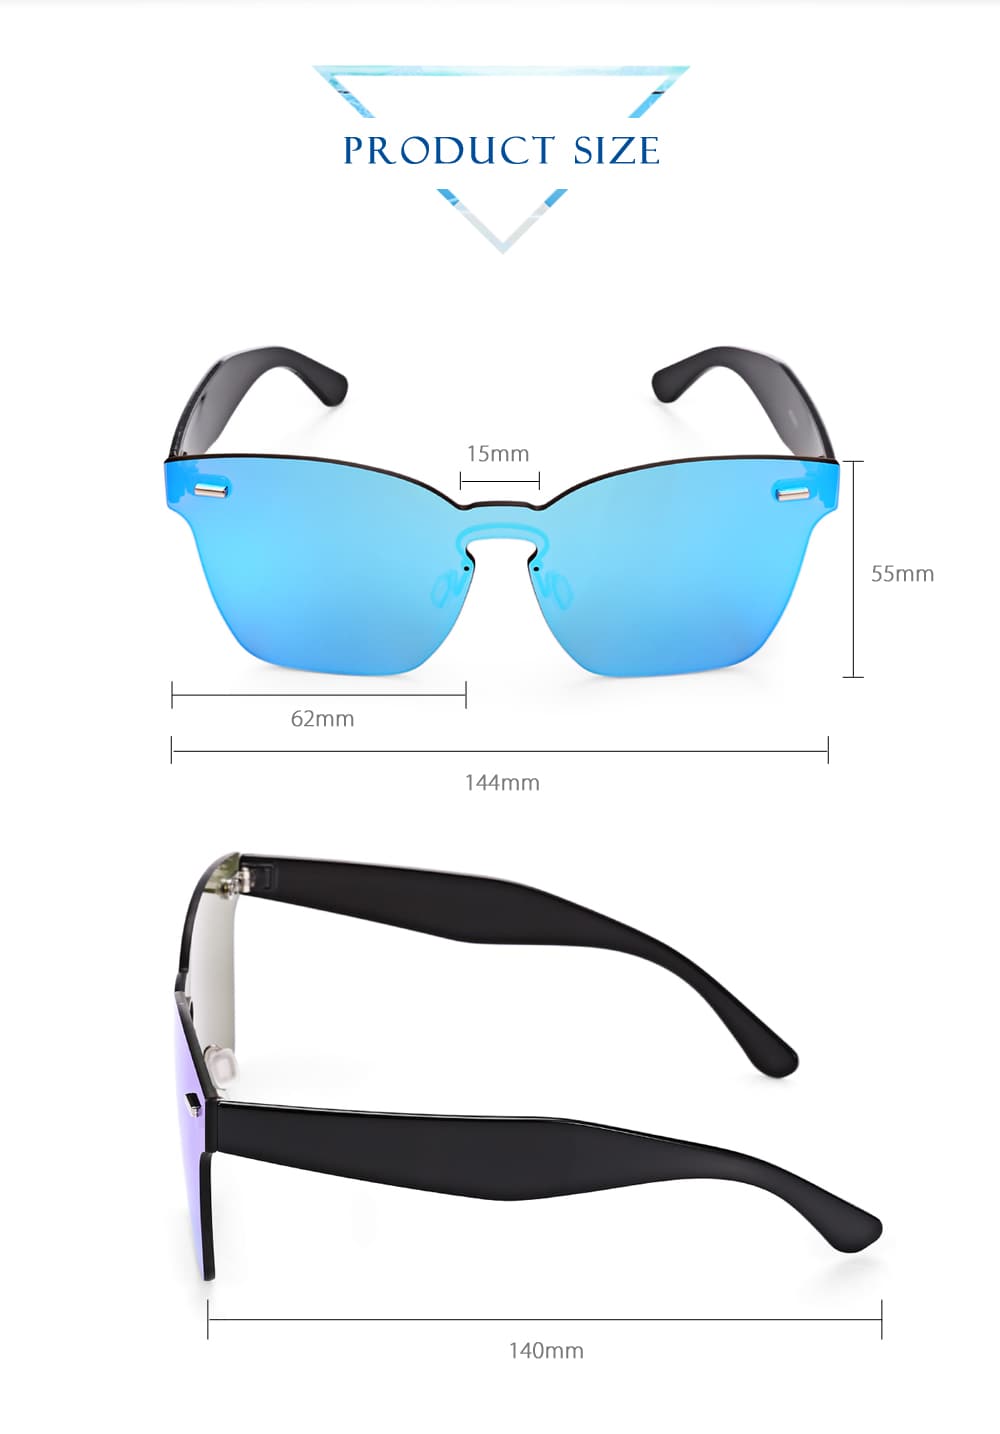 SENLAN 9820 Fashionable Square Metal Frame Leg Unisex Sunglasses- Pink Frame+Pink Lens